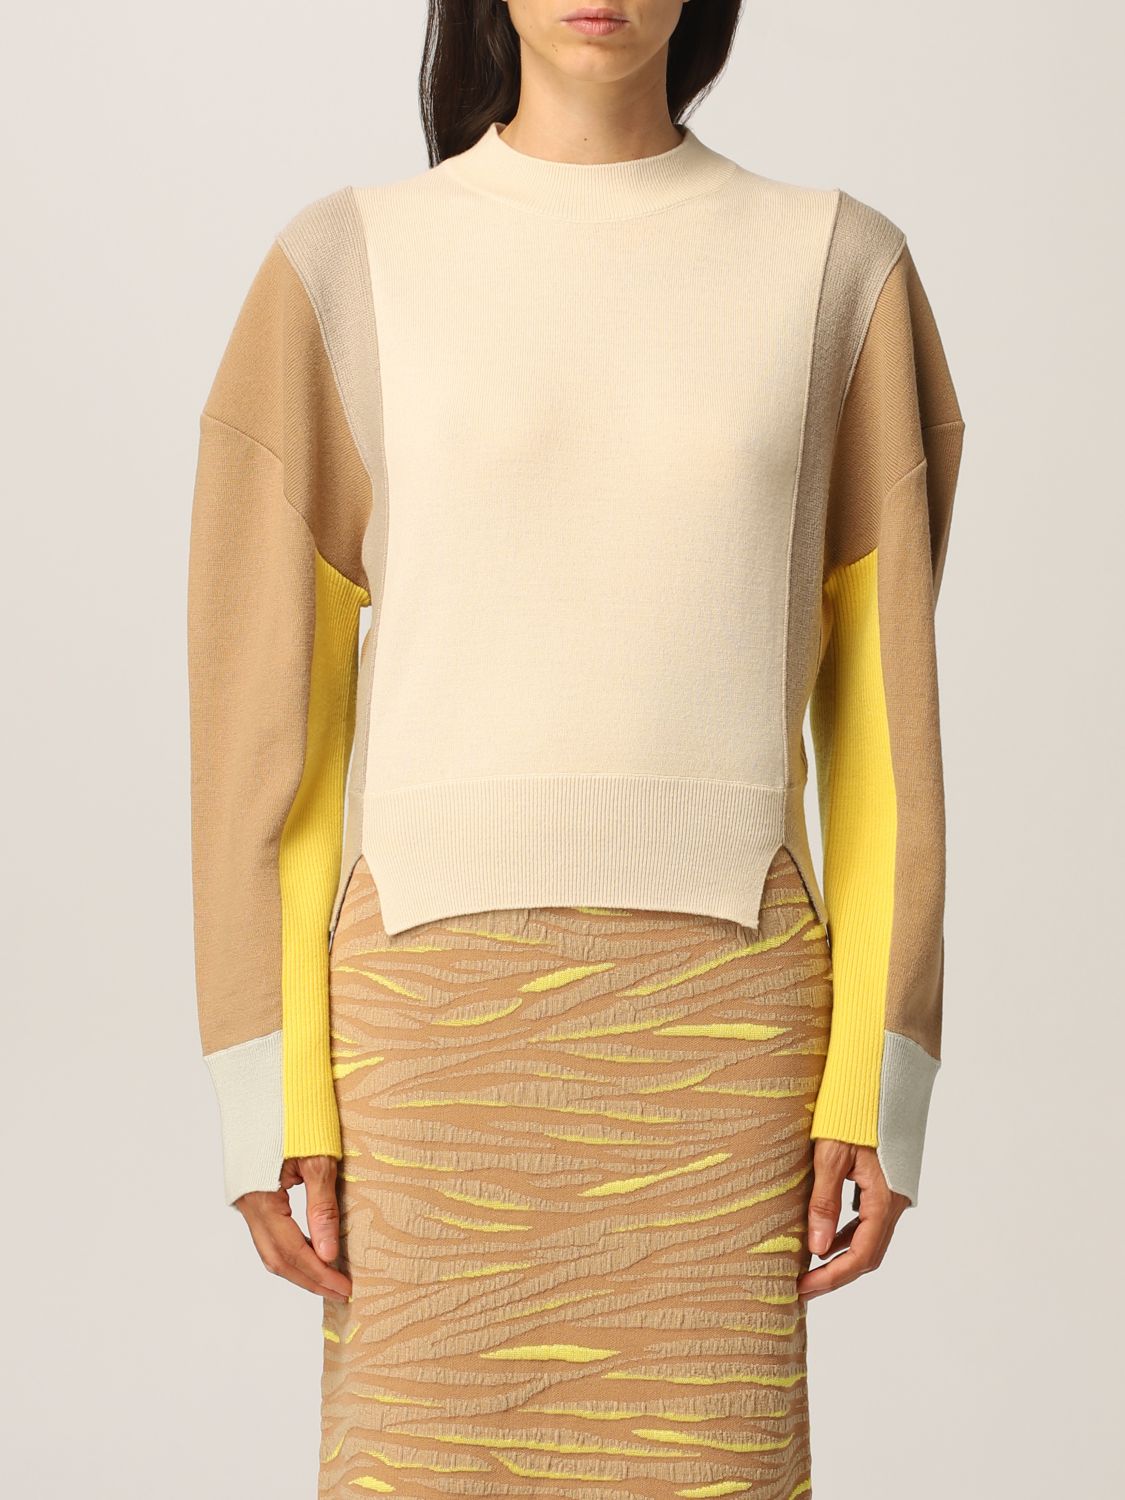 Stella McCartney color block sweater